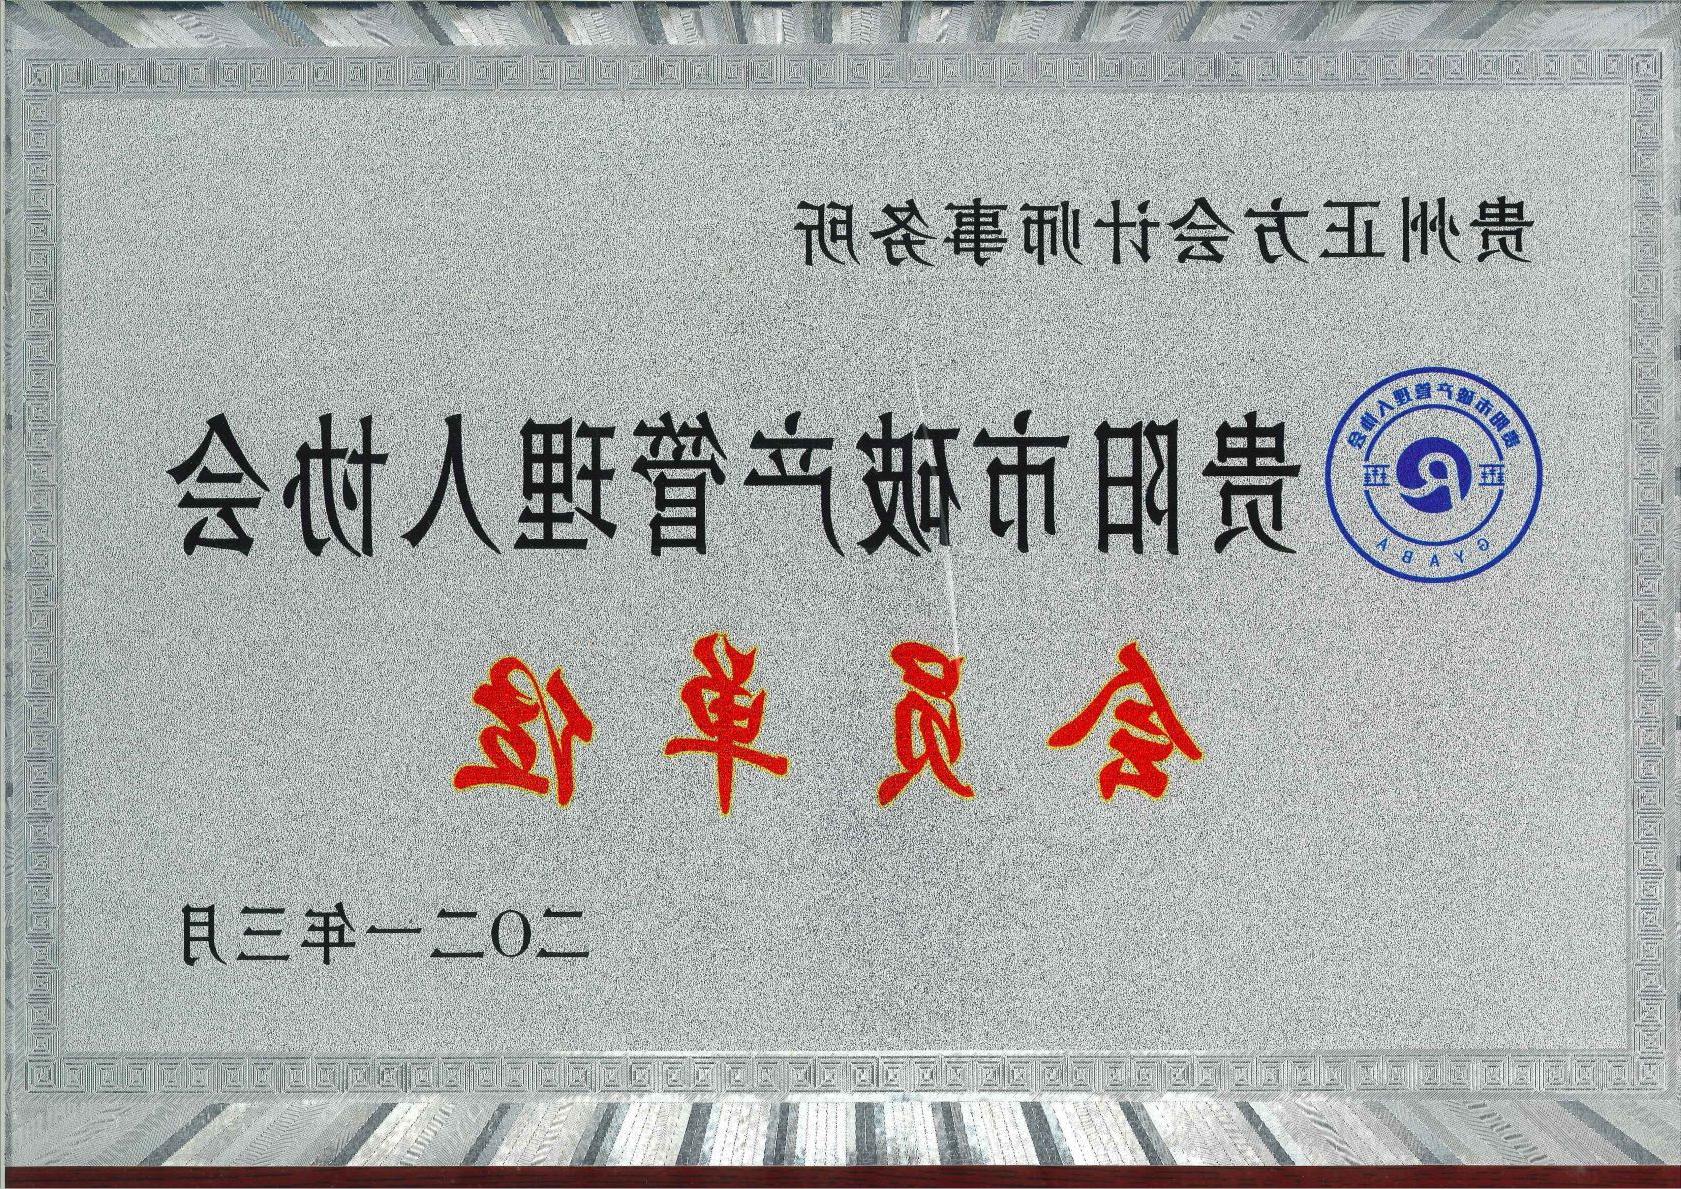 Member of Guiyang Bankruptcy Administrators Association